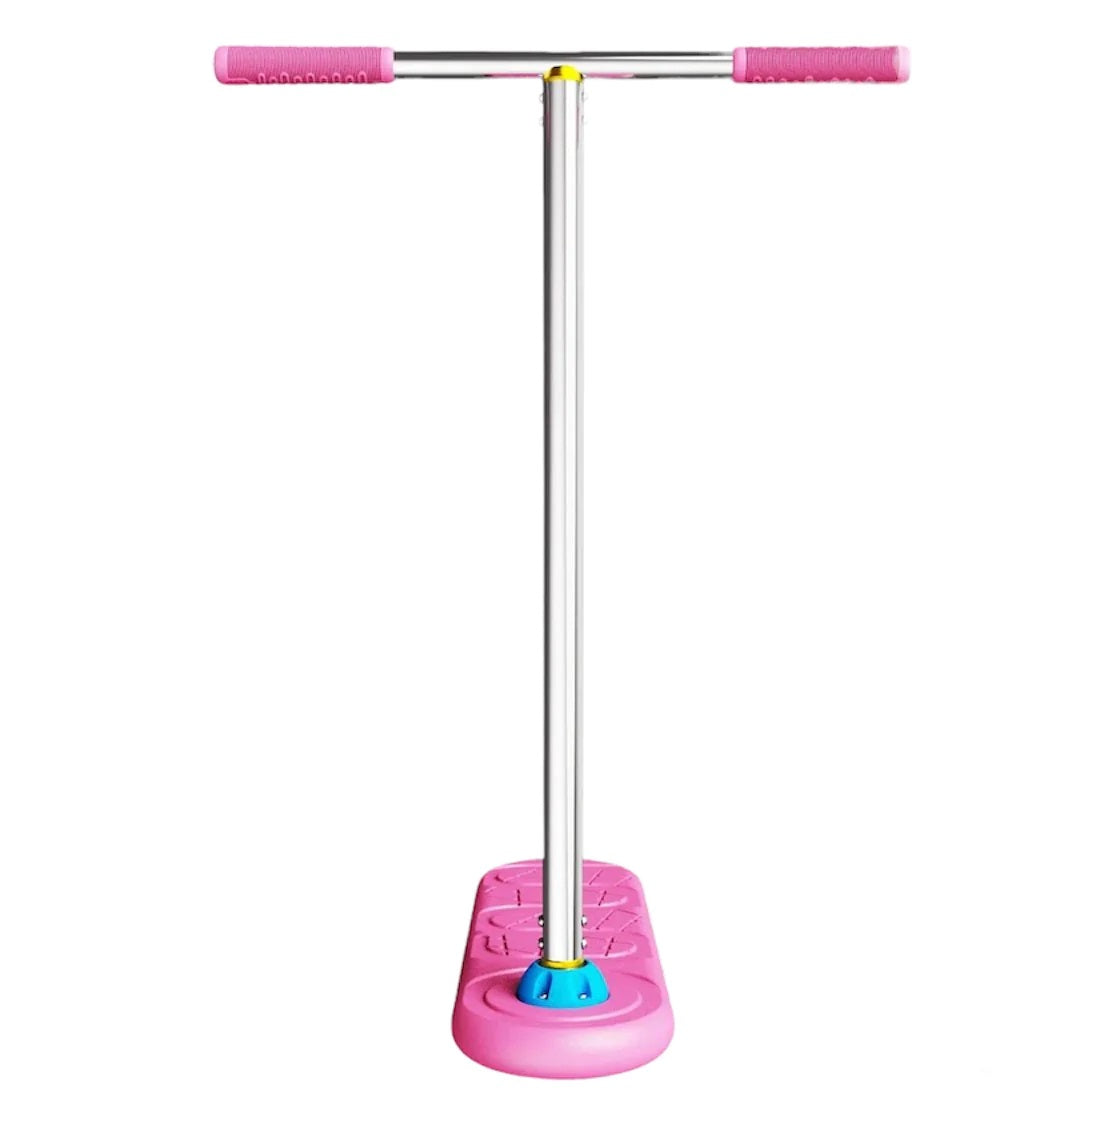 INDO Pro Indoor Trampoline Stunt Scooter - Pink Pop - Front